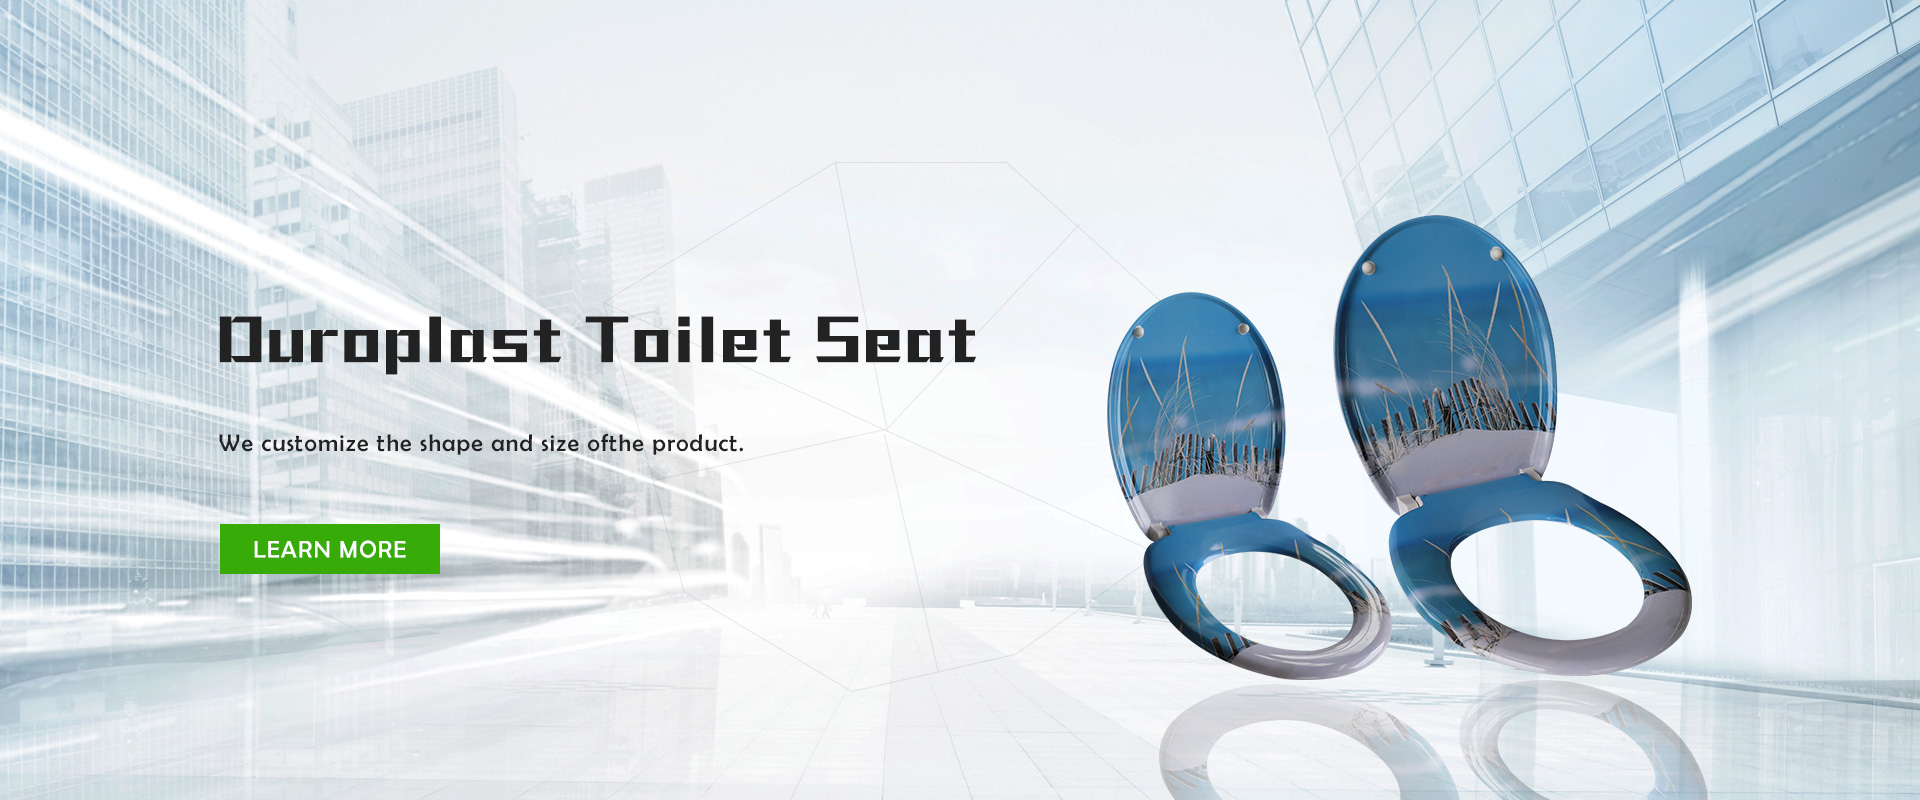 Duroplast Toilet Seat